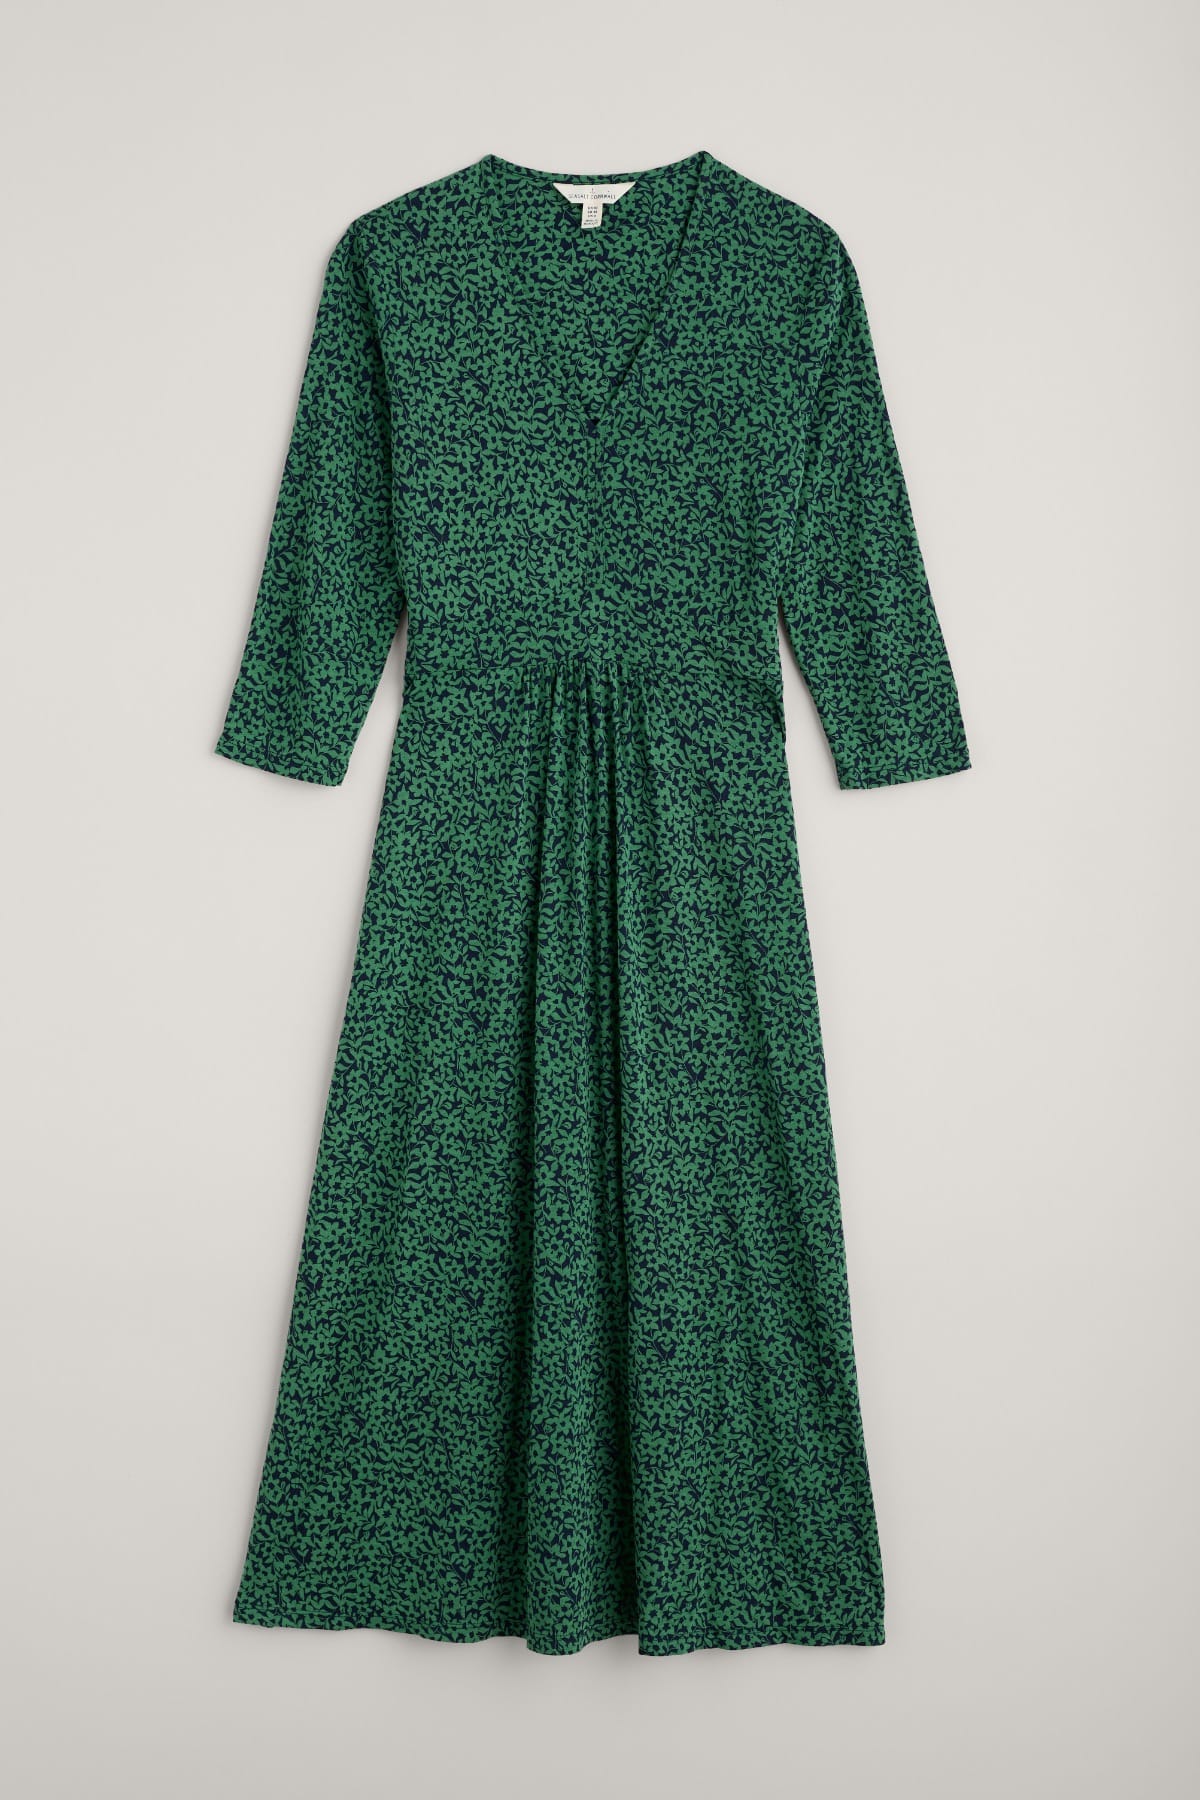 Kleid Carwynnen Ditsy ⋆ Mode Green Bella Nachhaltige ⋆